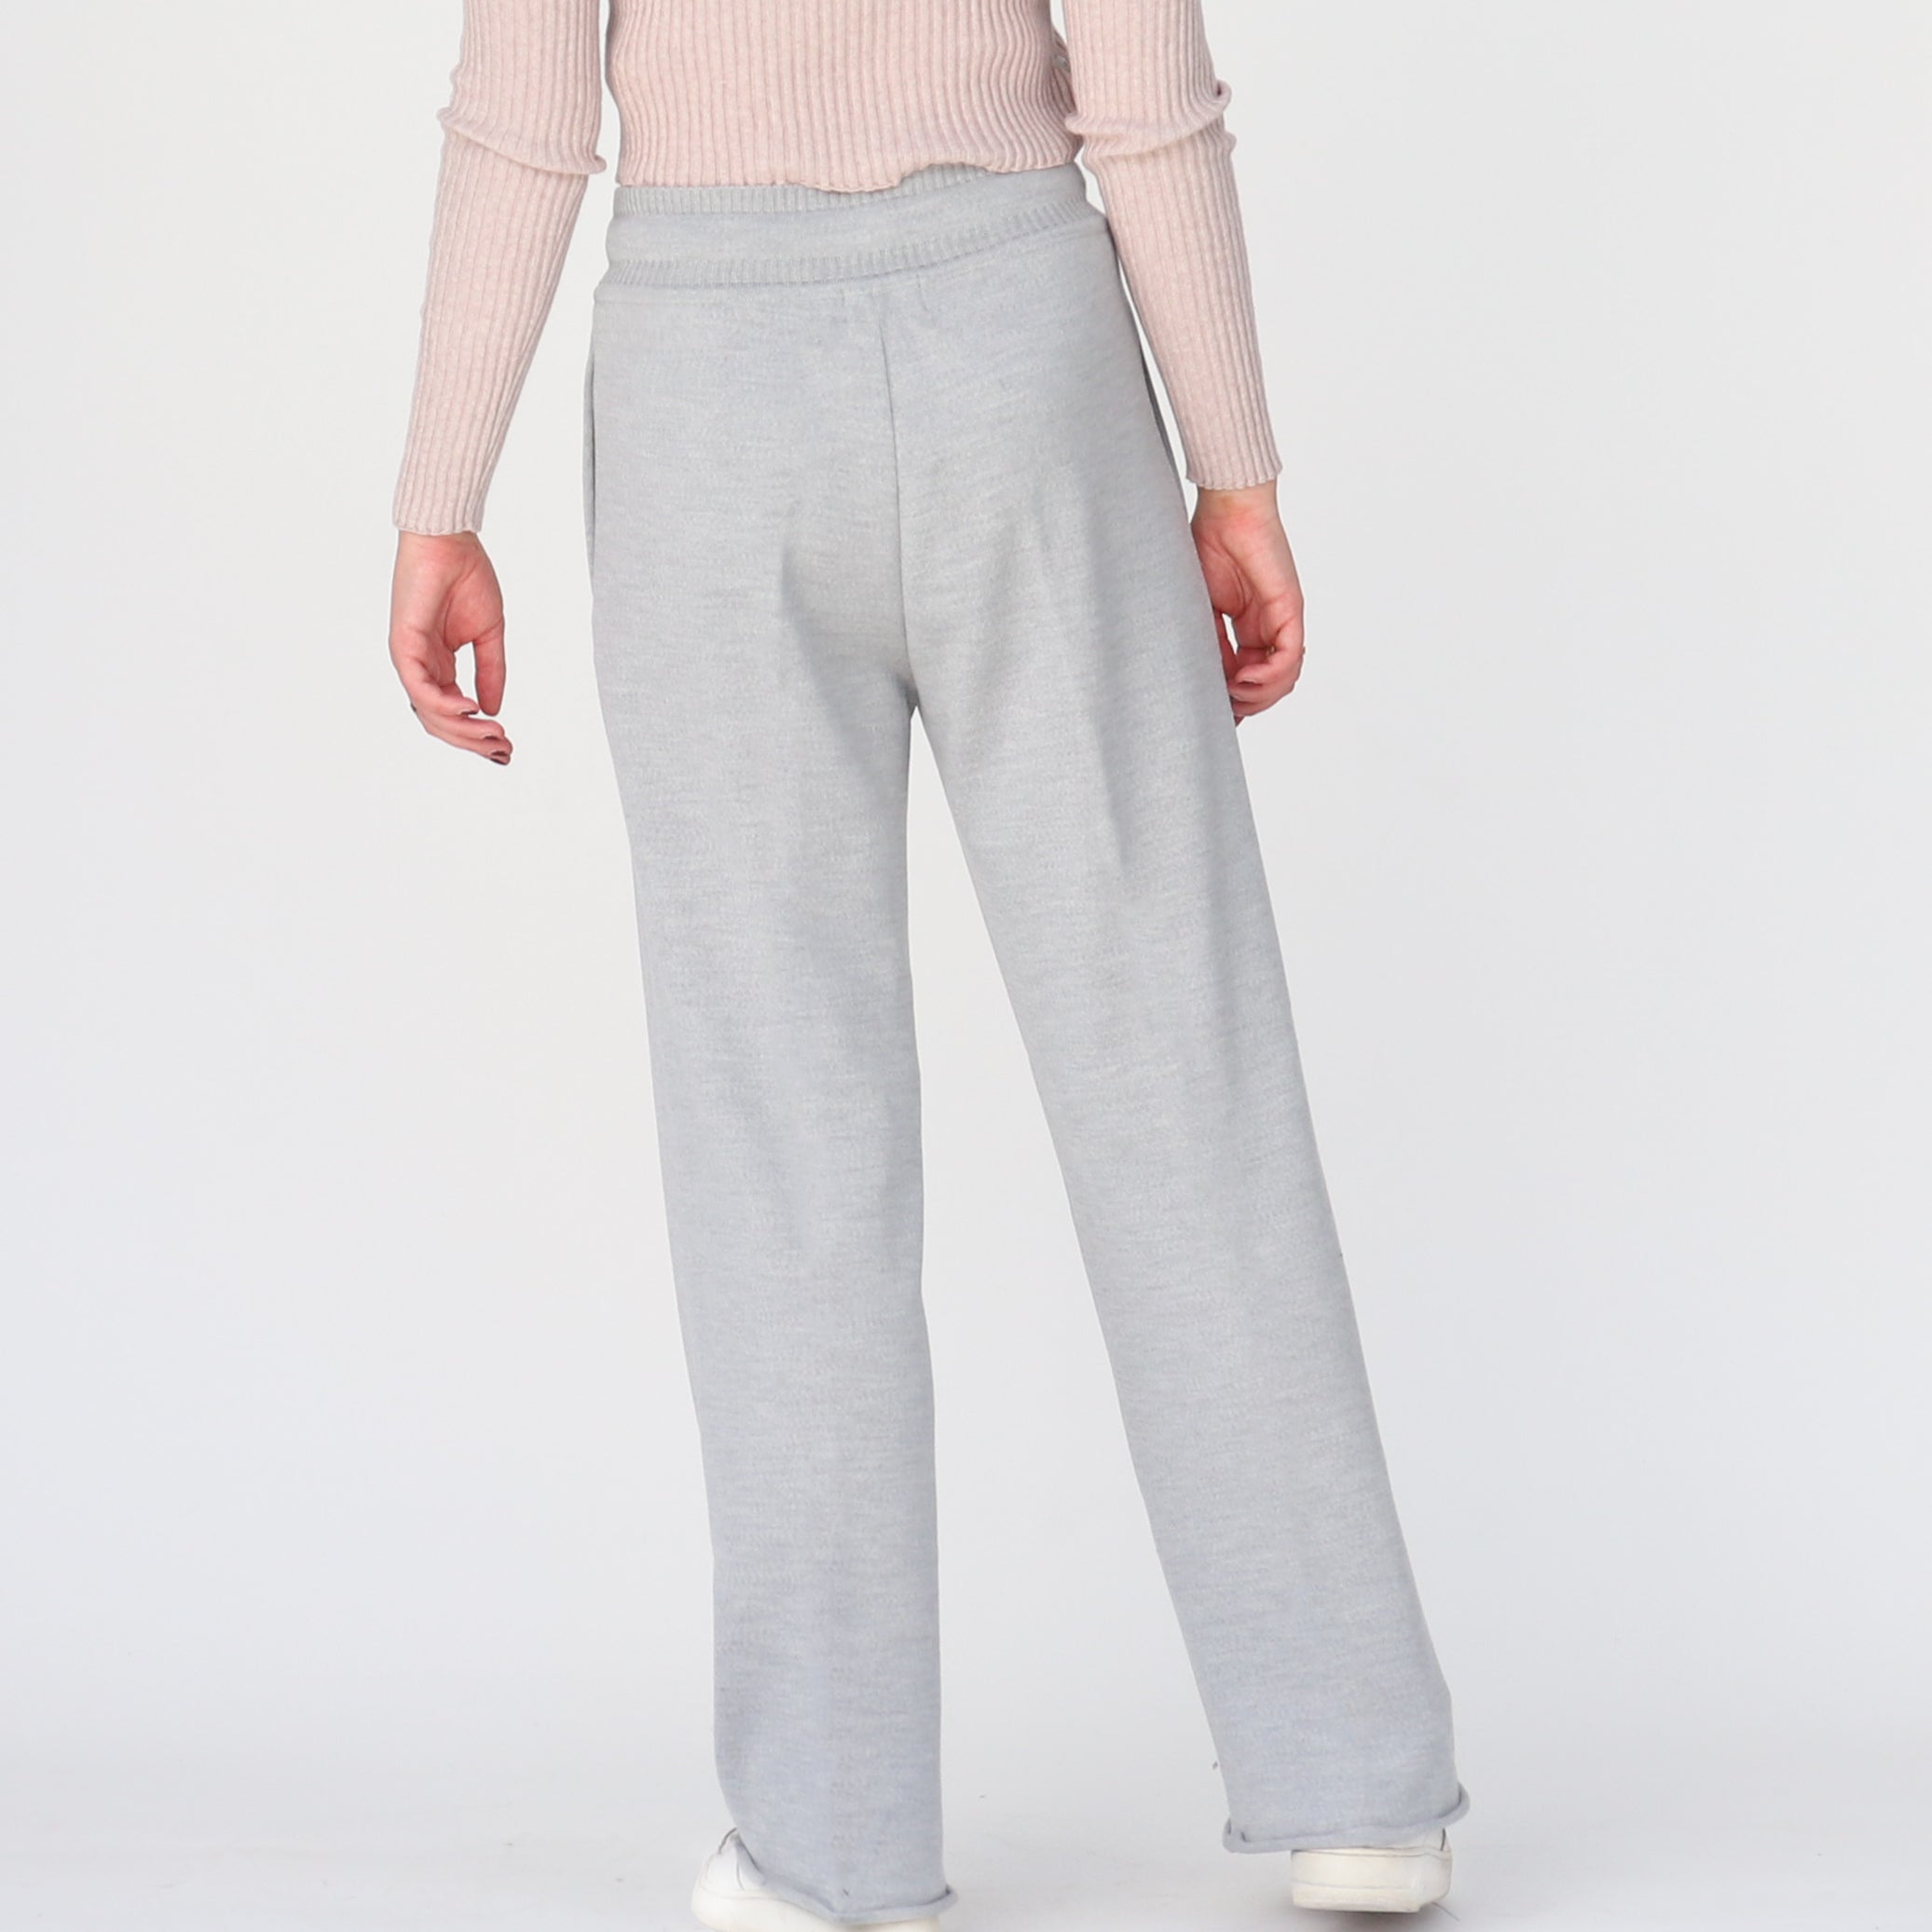 Full Length Pant - Soft Grey